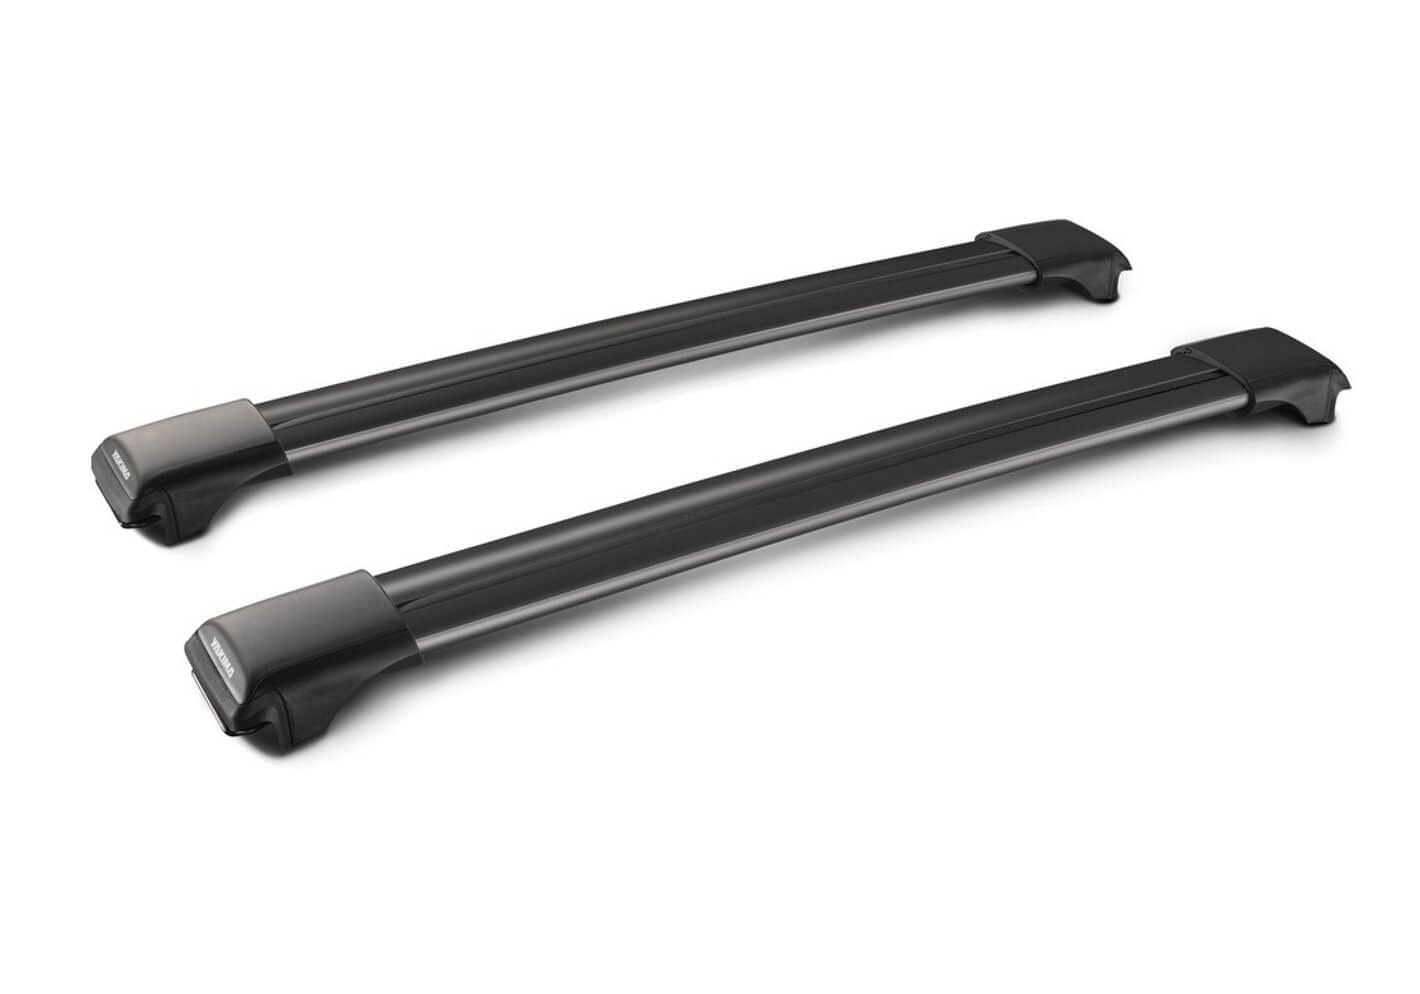 Isuzu D-Max extended cab (2011 to 2020):Yakima roof bars package - S45 Aero-X black bars